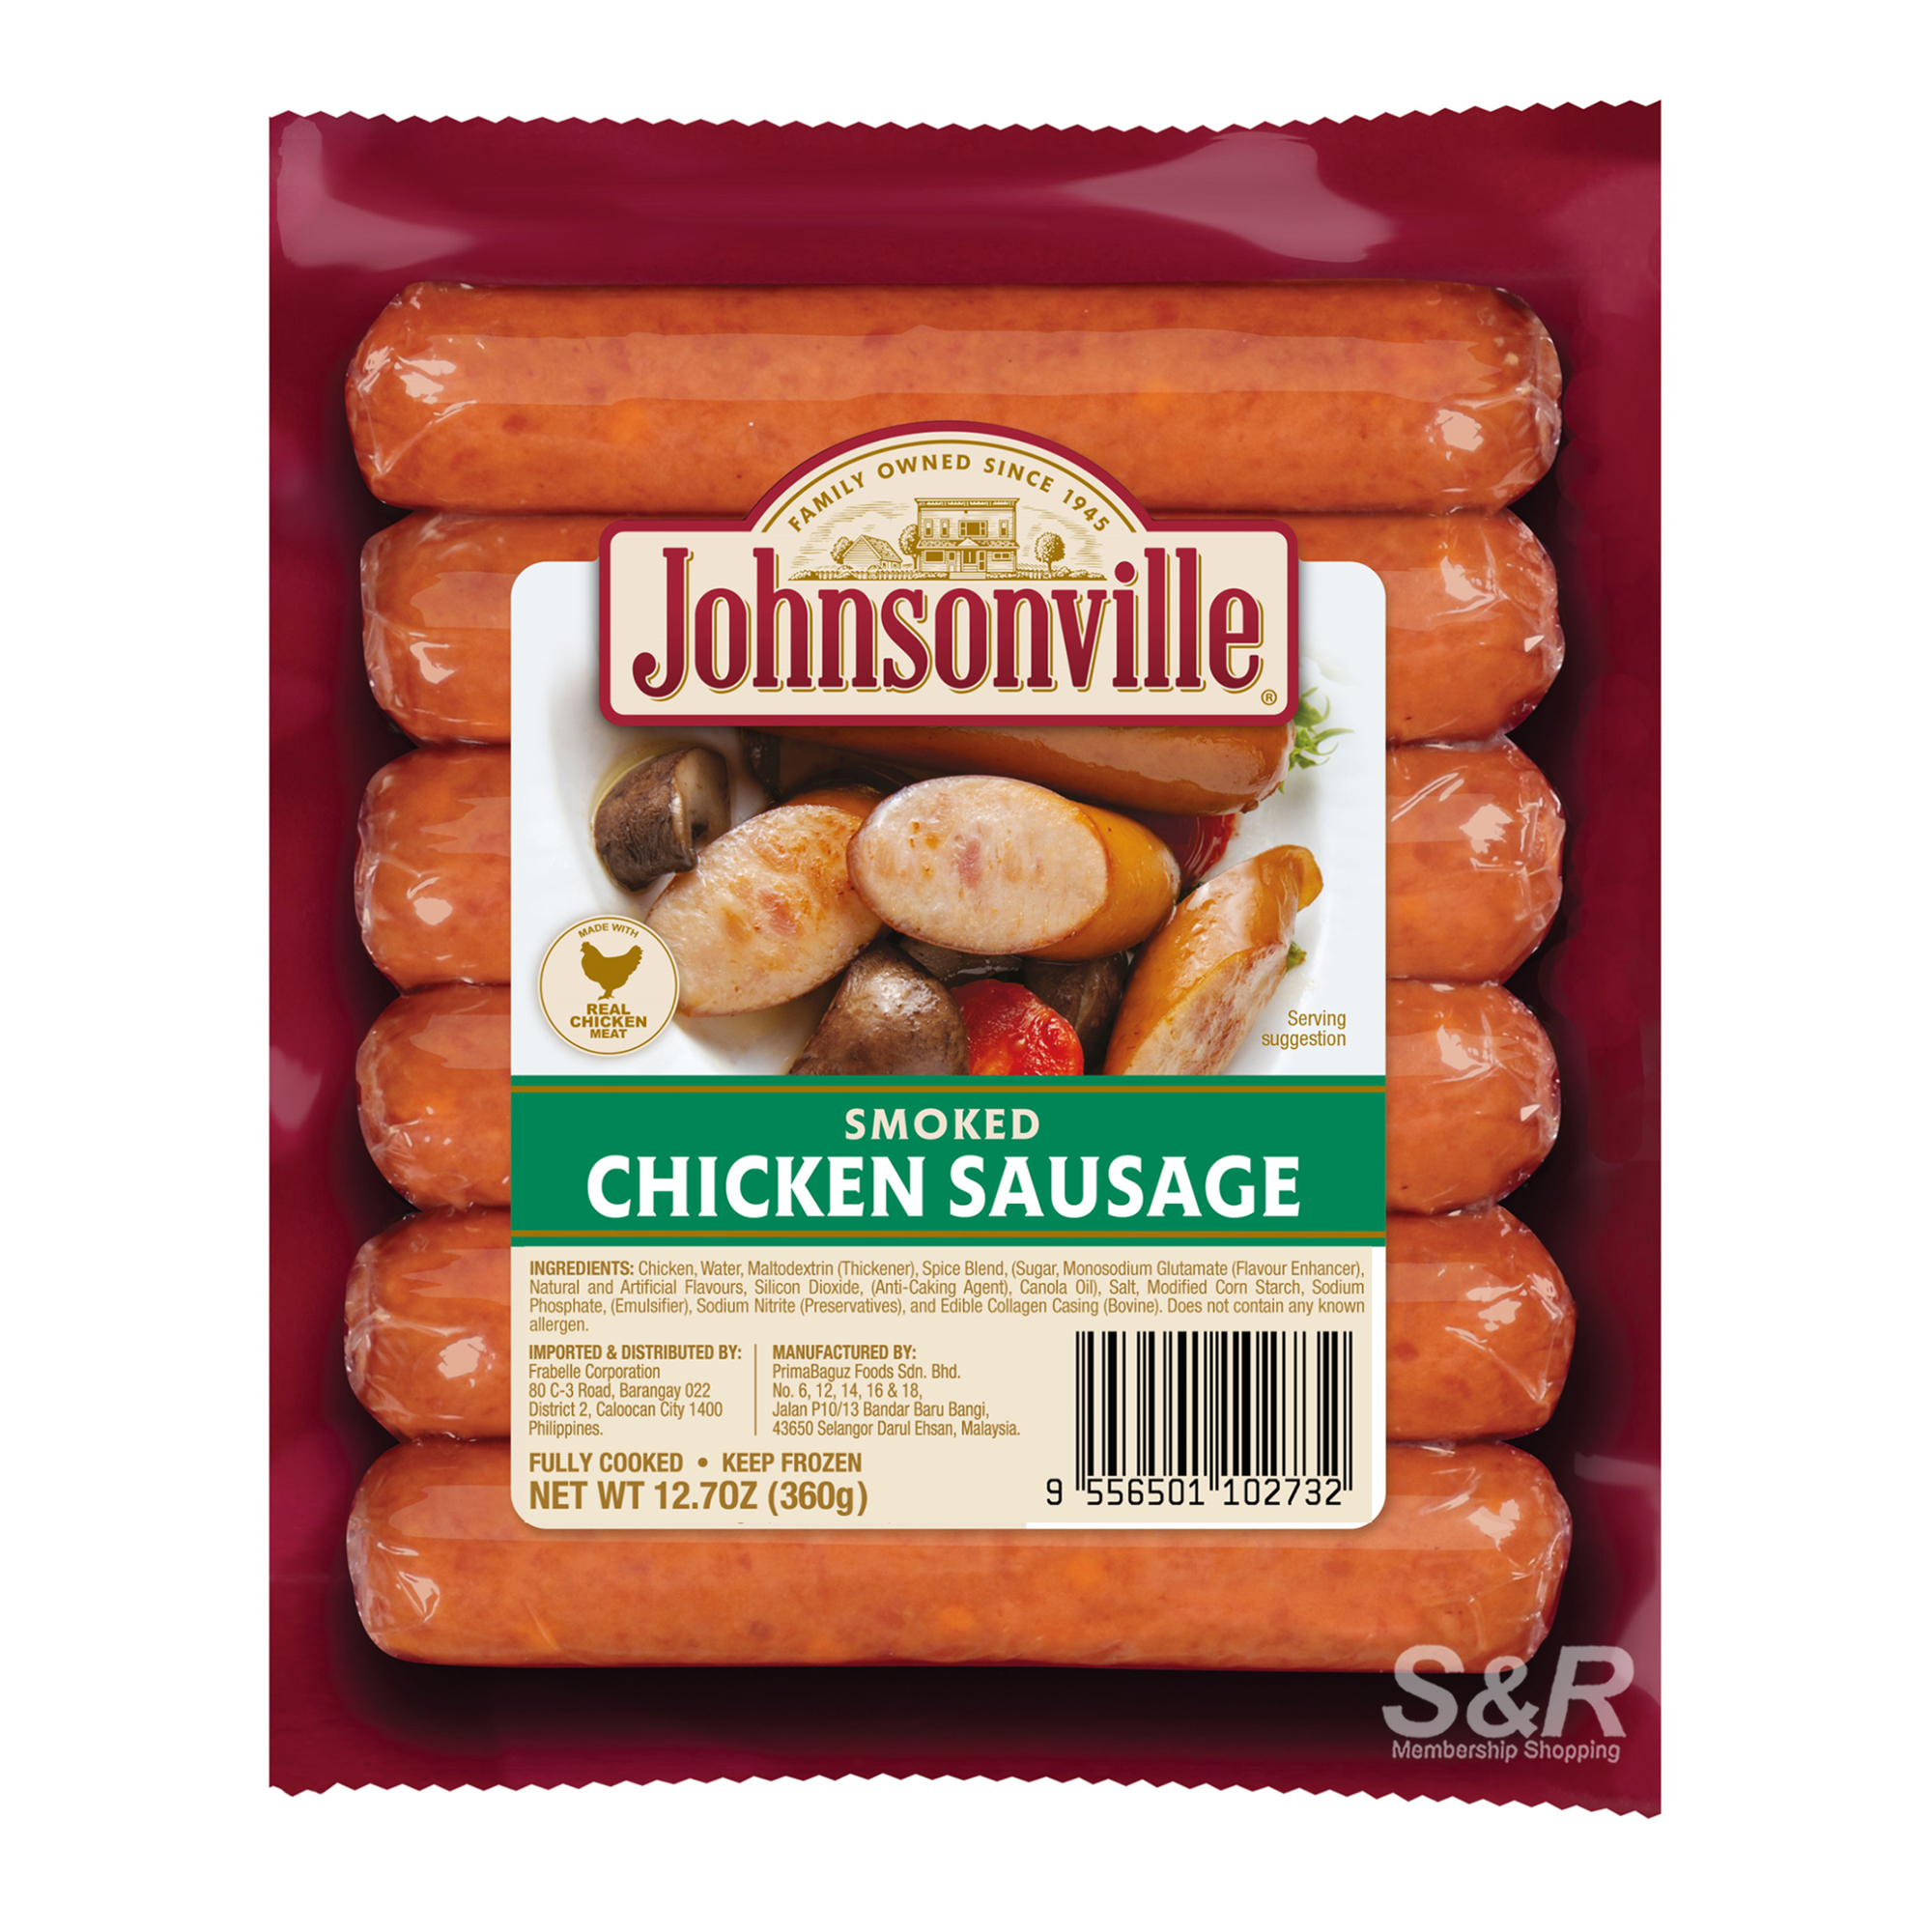 Johnsonville Smoked Chicken Sausage 360g